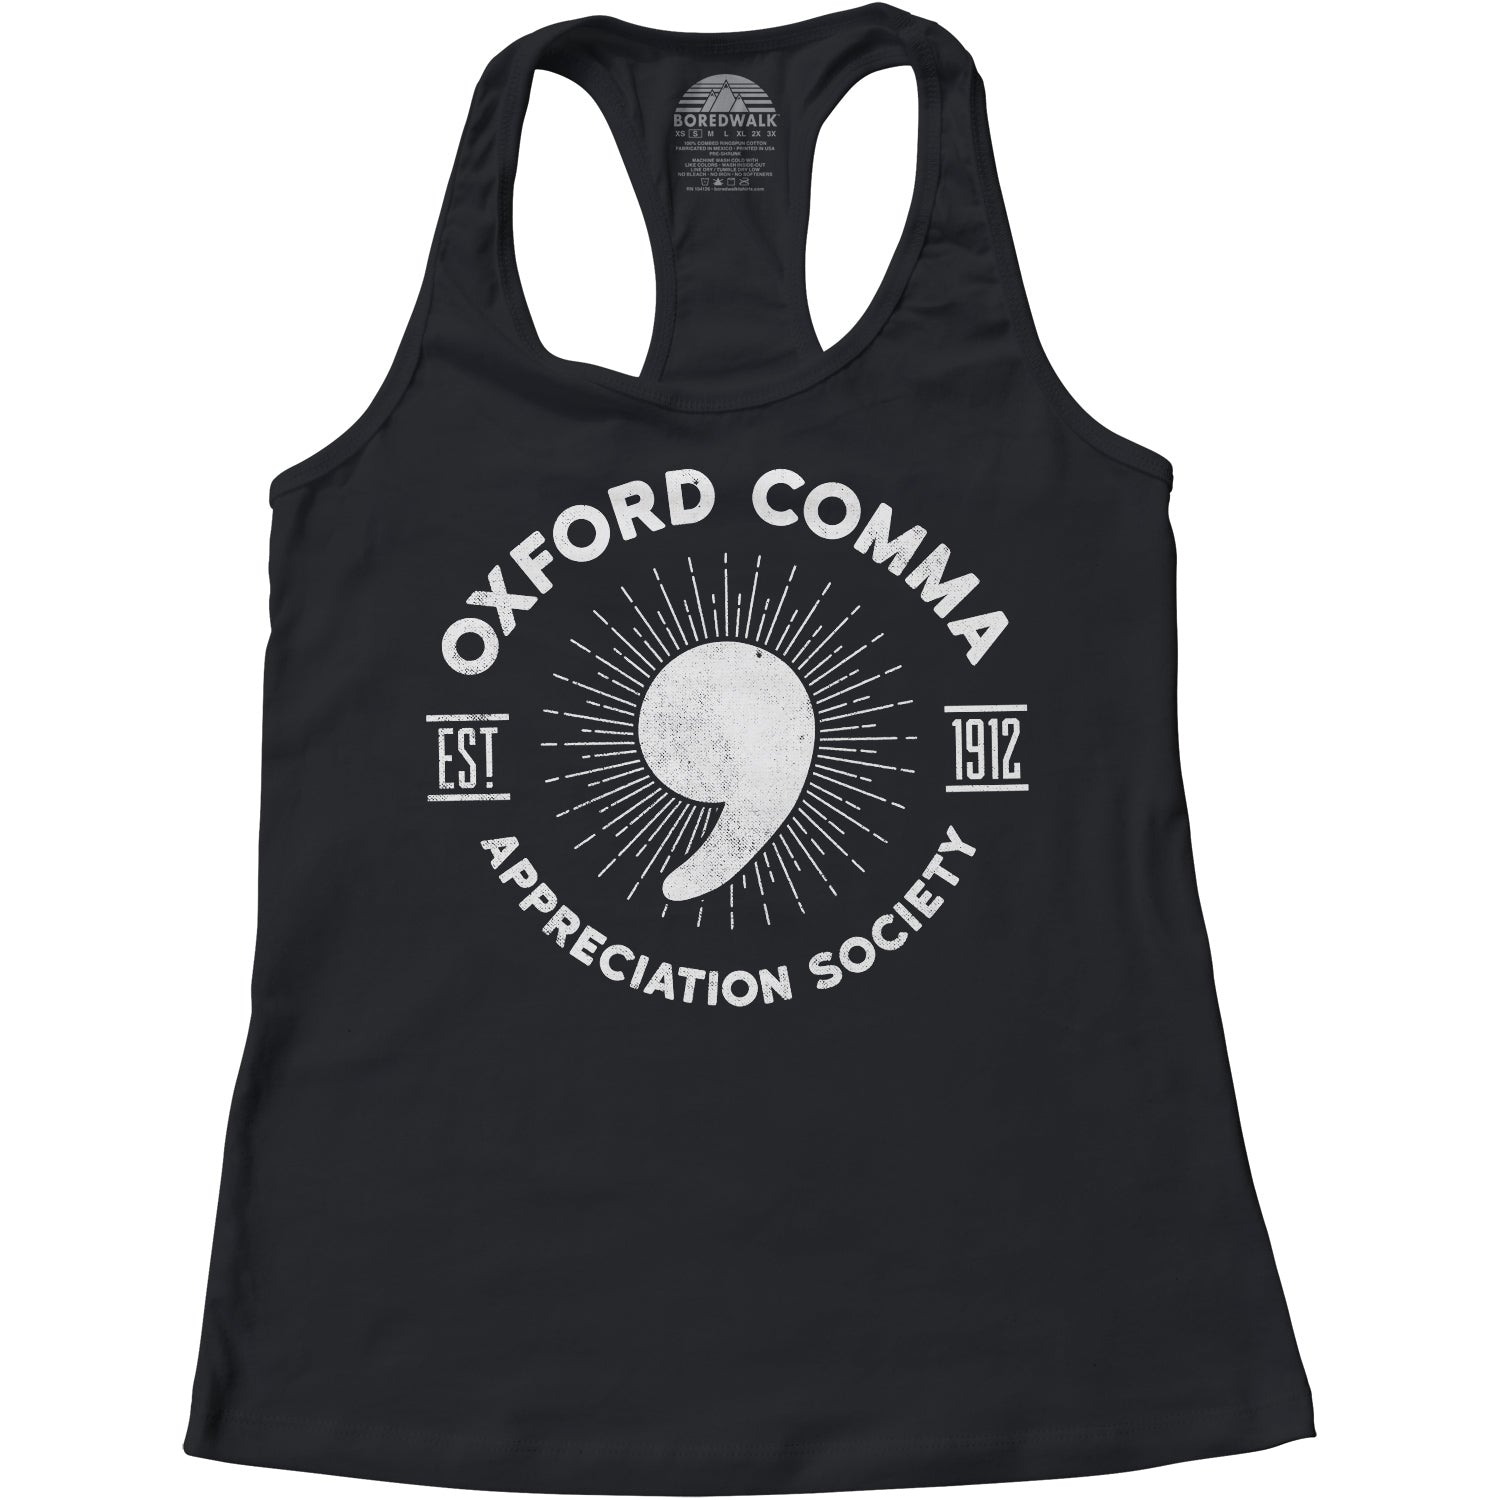 Women's Oxford Comma Appreciation Society Racerback Tank Top